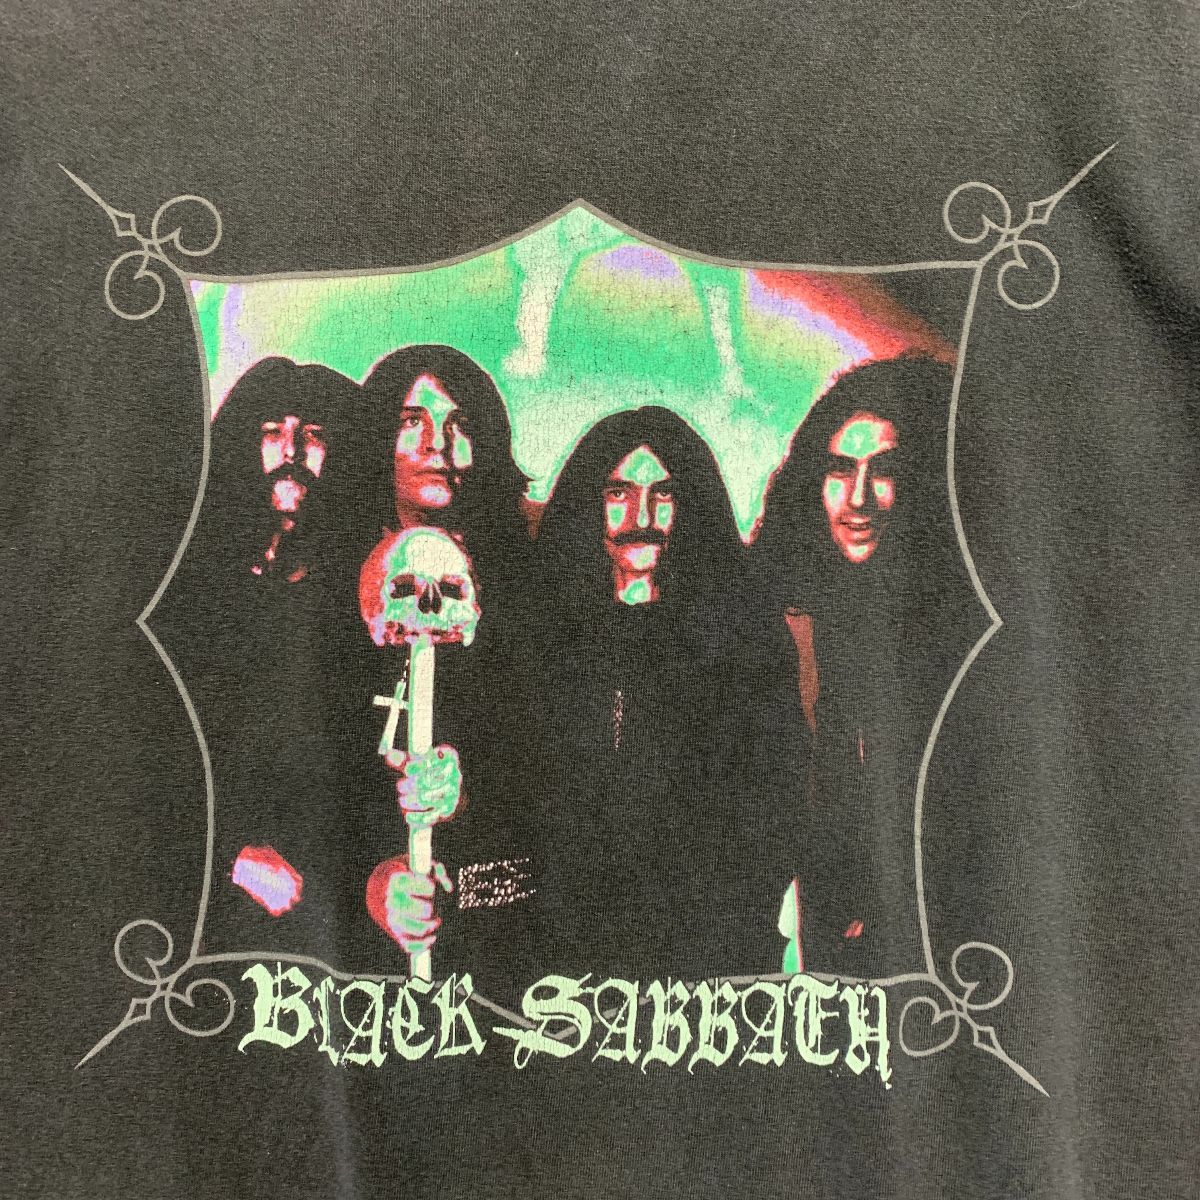 Band Black T-shirt Vintage As-is Cut Sabbath | Boxy Distressed Boardwalk